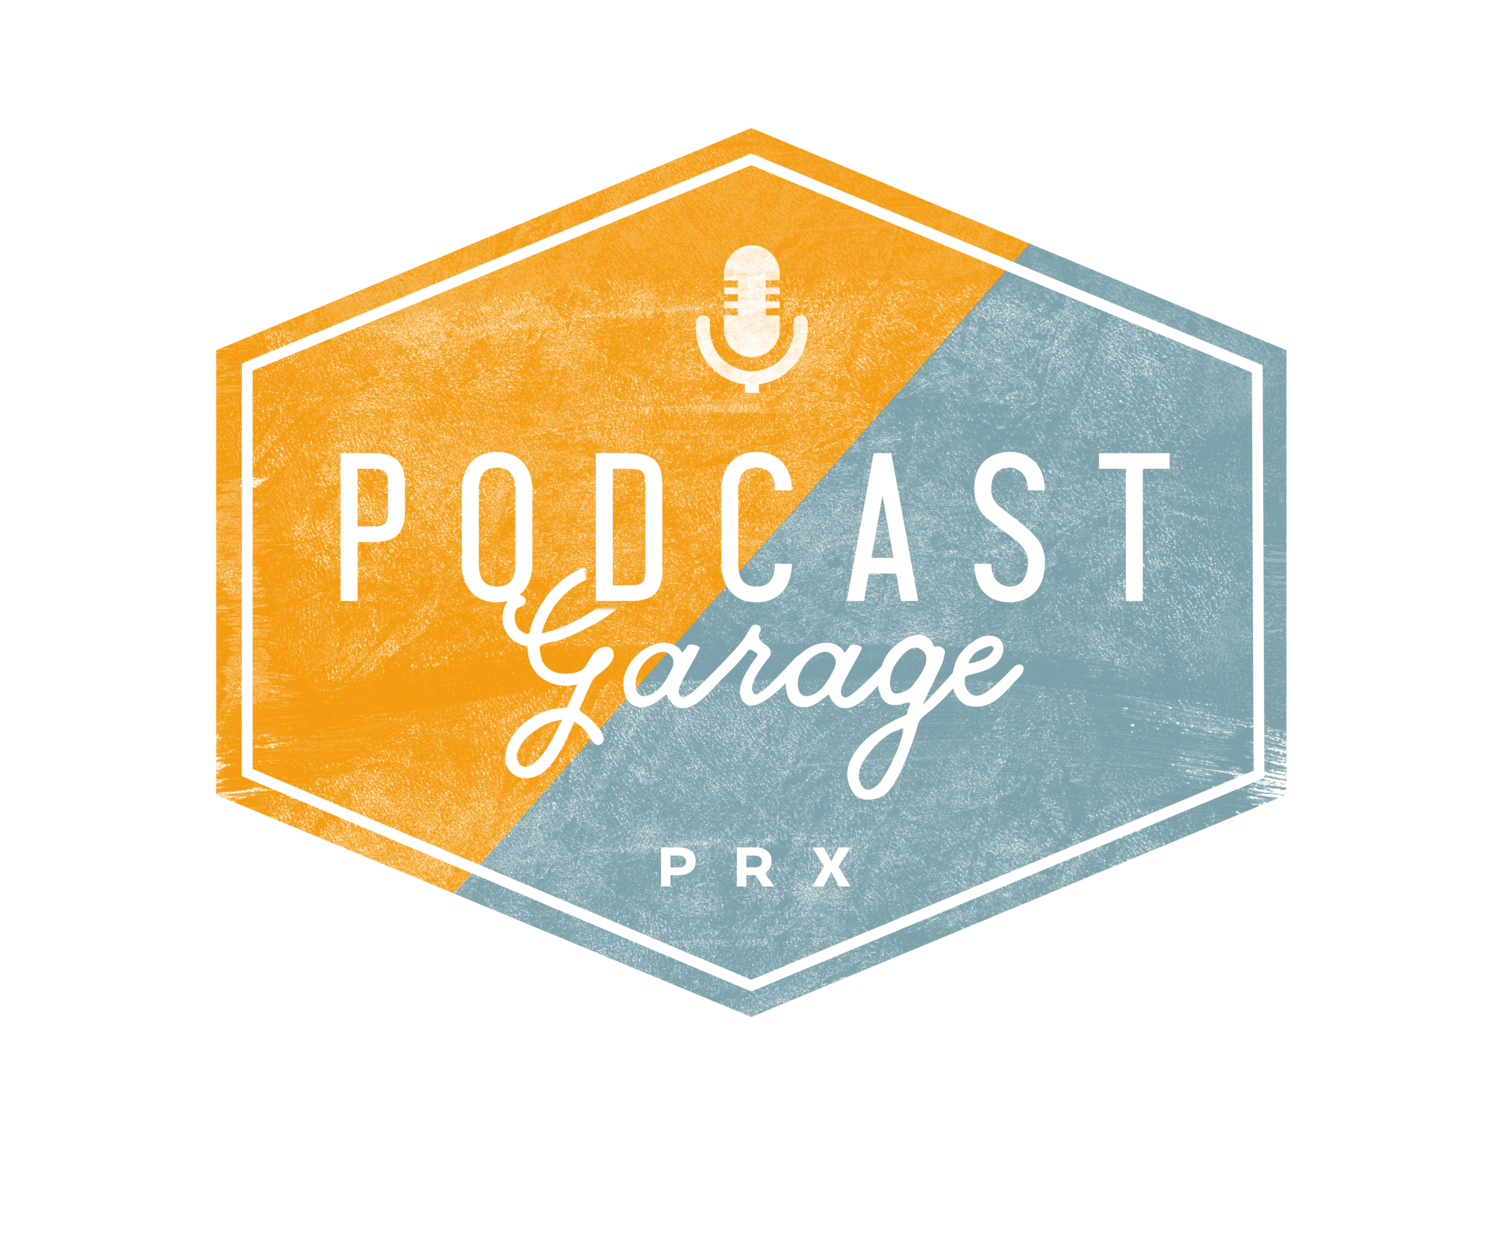 Podcast Garage